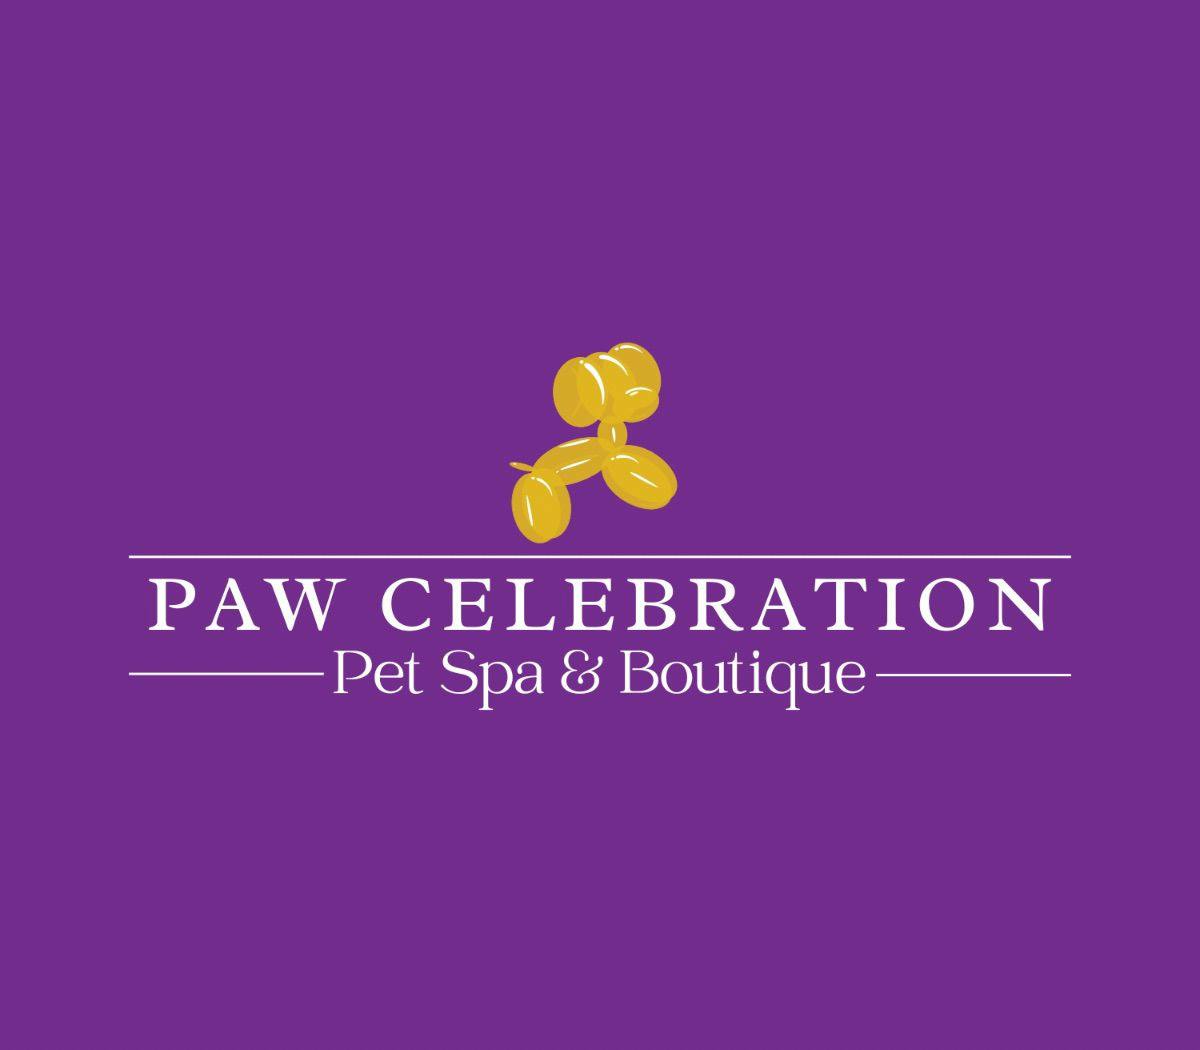 Paw Celebration Pet Grooming & Boutique Brand Logo